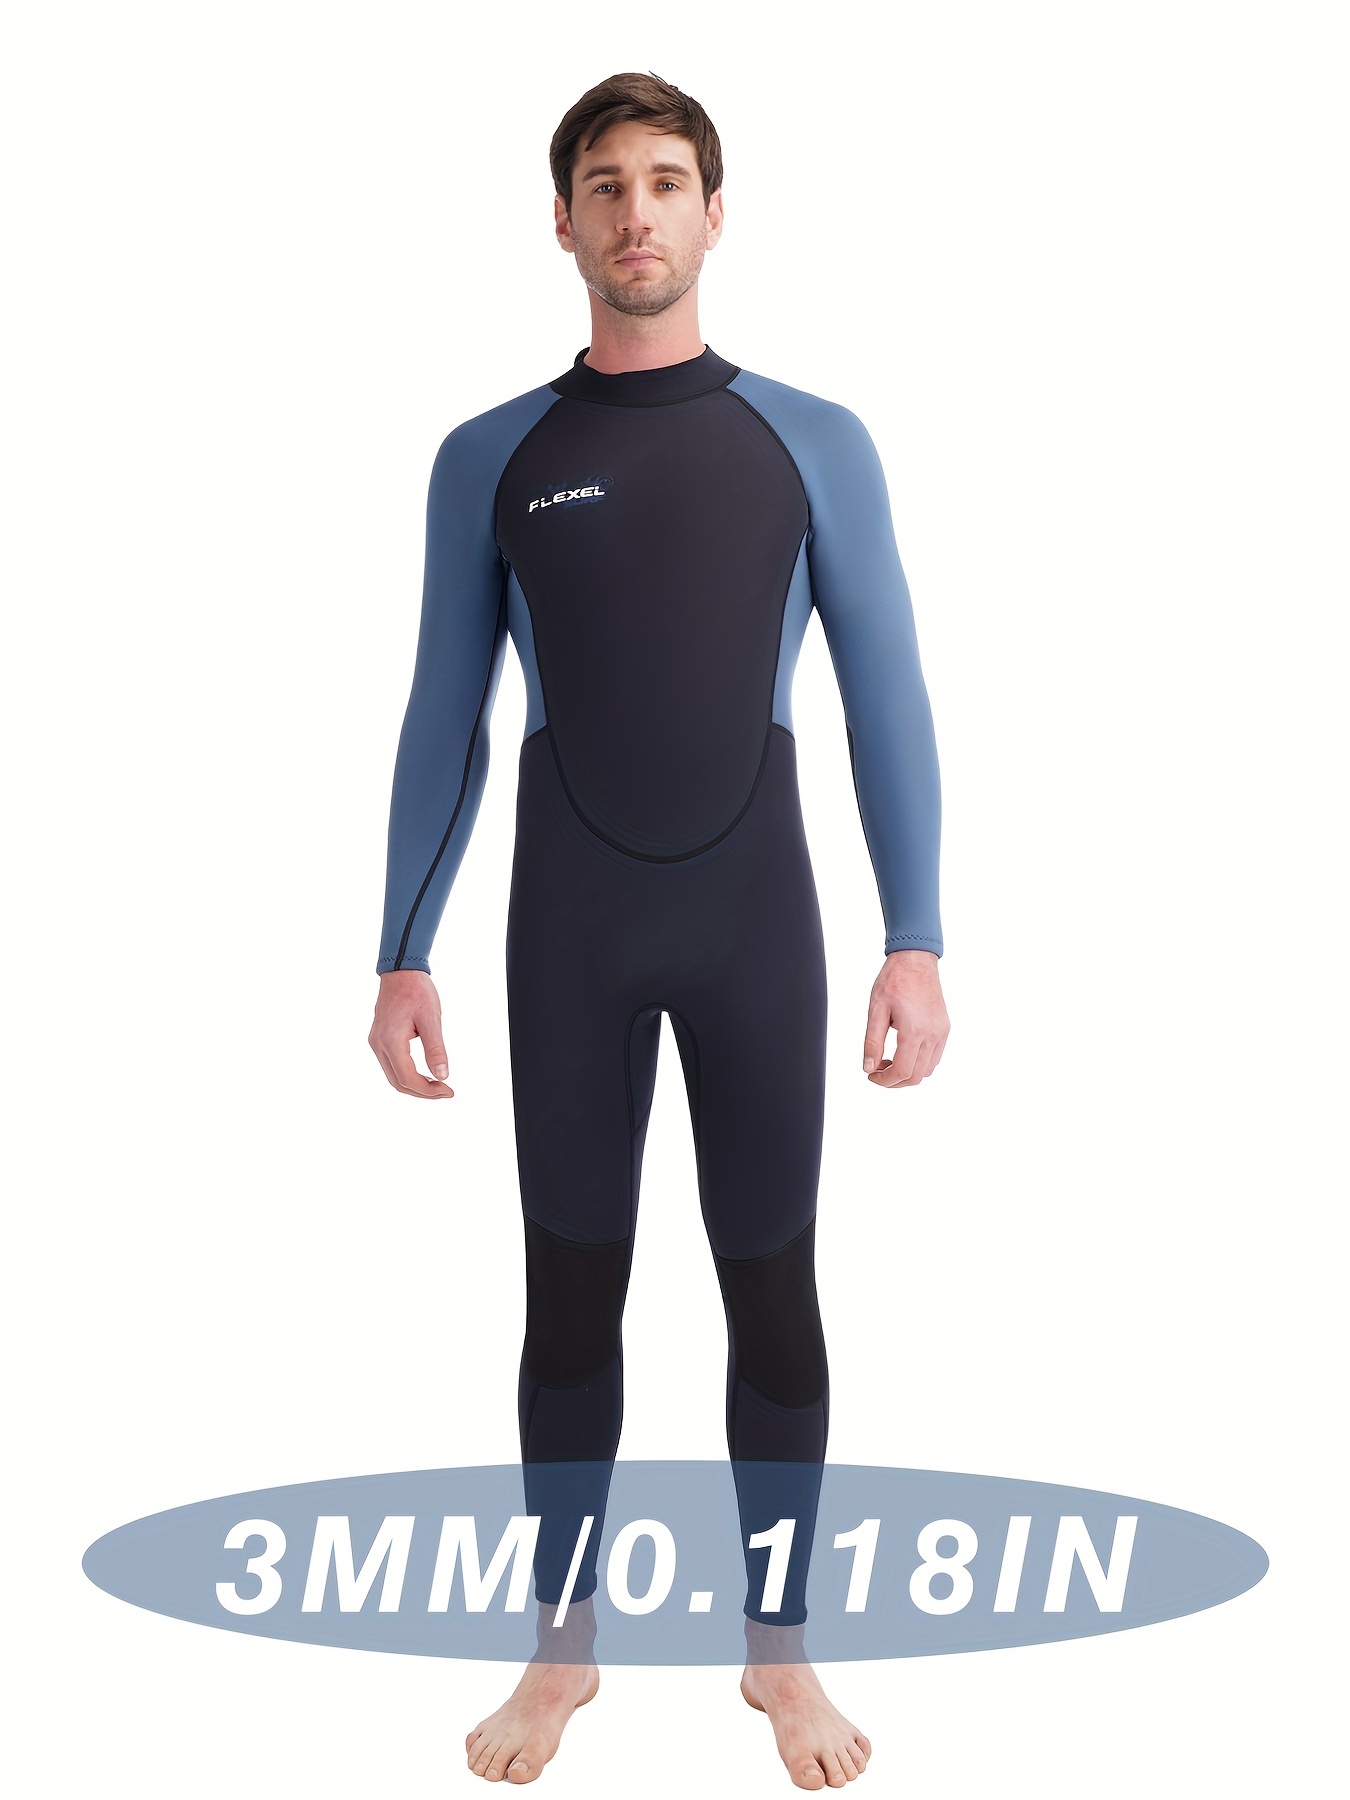 Buy Wetsuit Women Men Full Body Wet Suit 3MM Neoprene Surfing